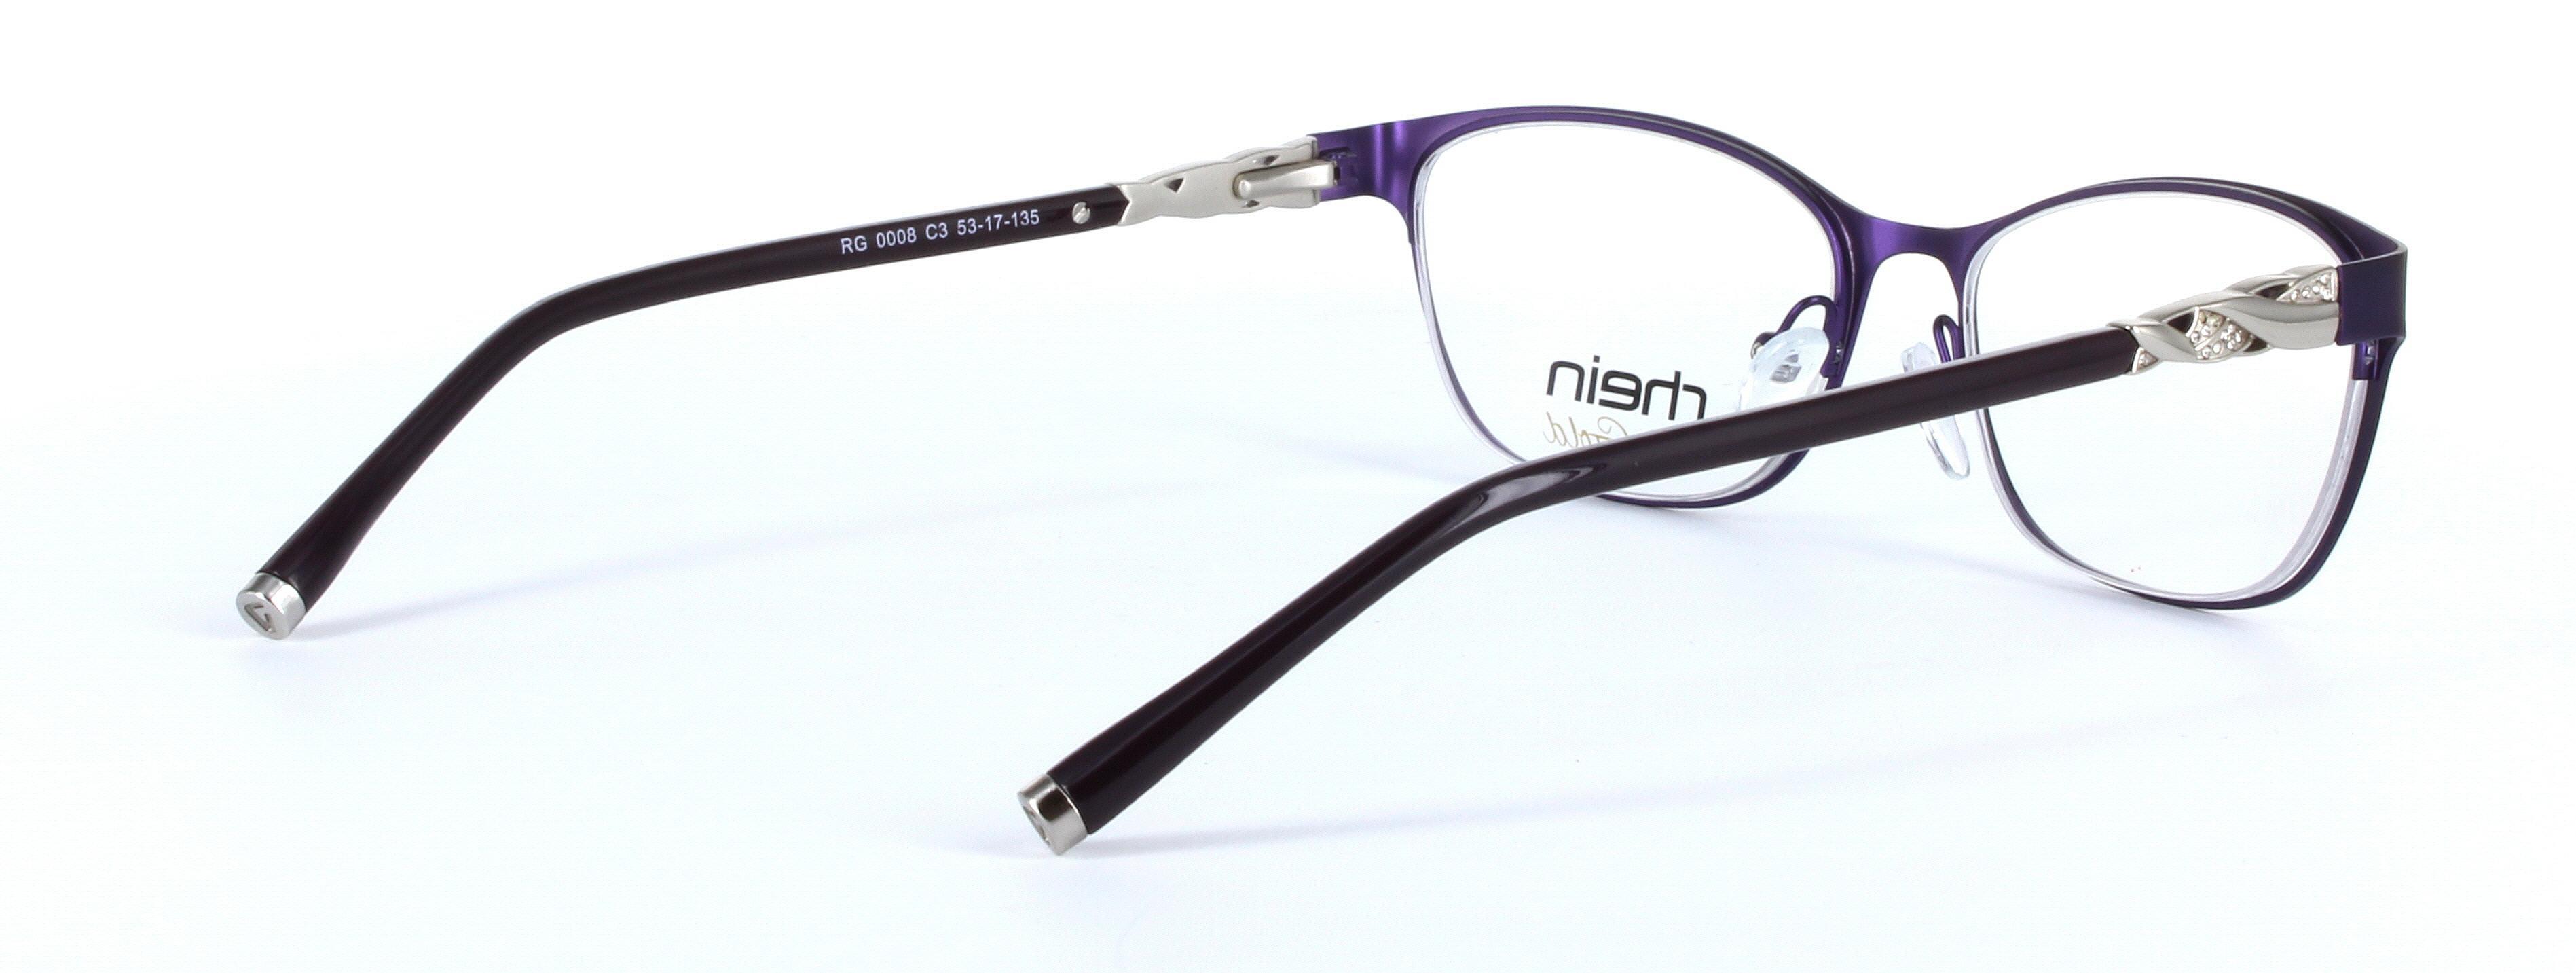 Nova Purple Full Rim Oval Round Metal Glasses - Image View 4